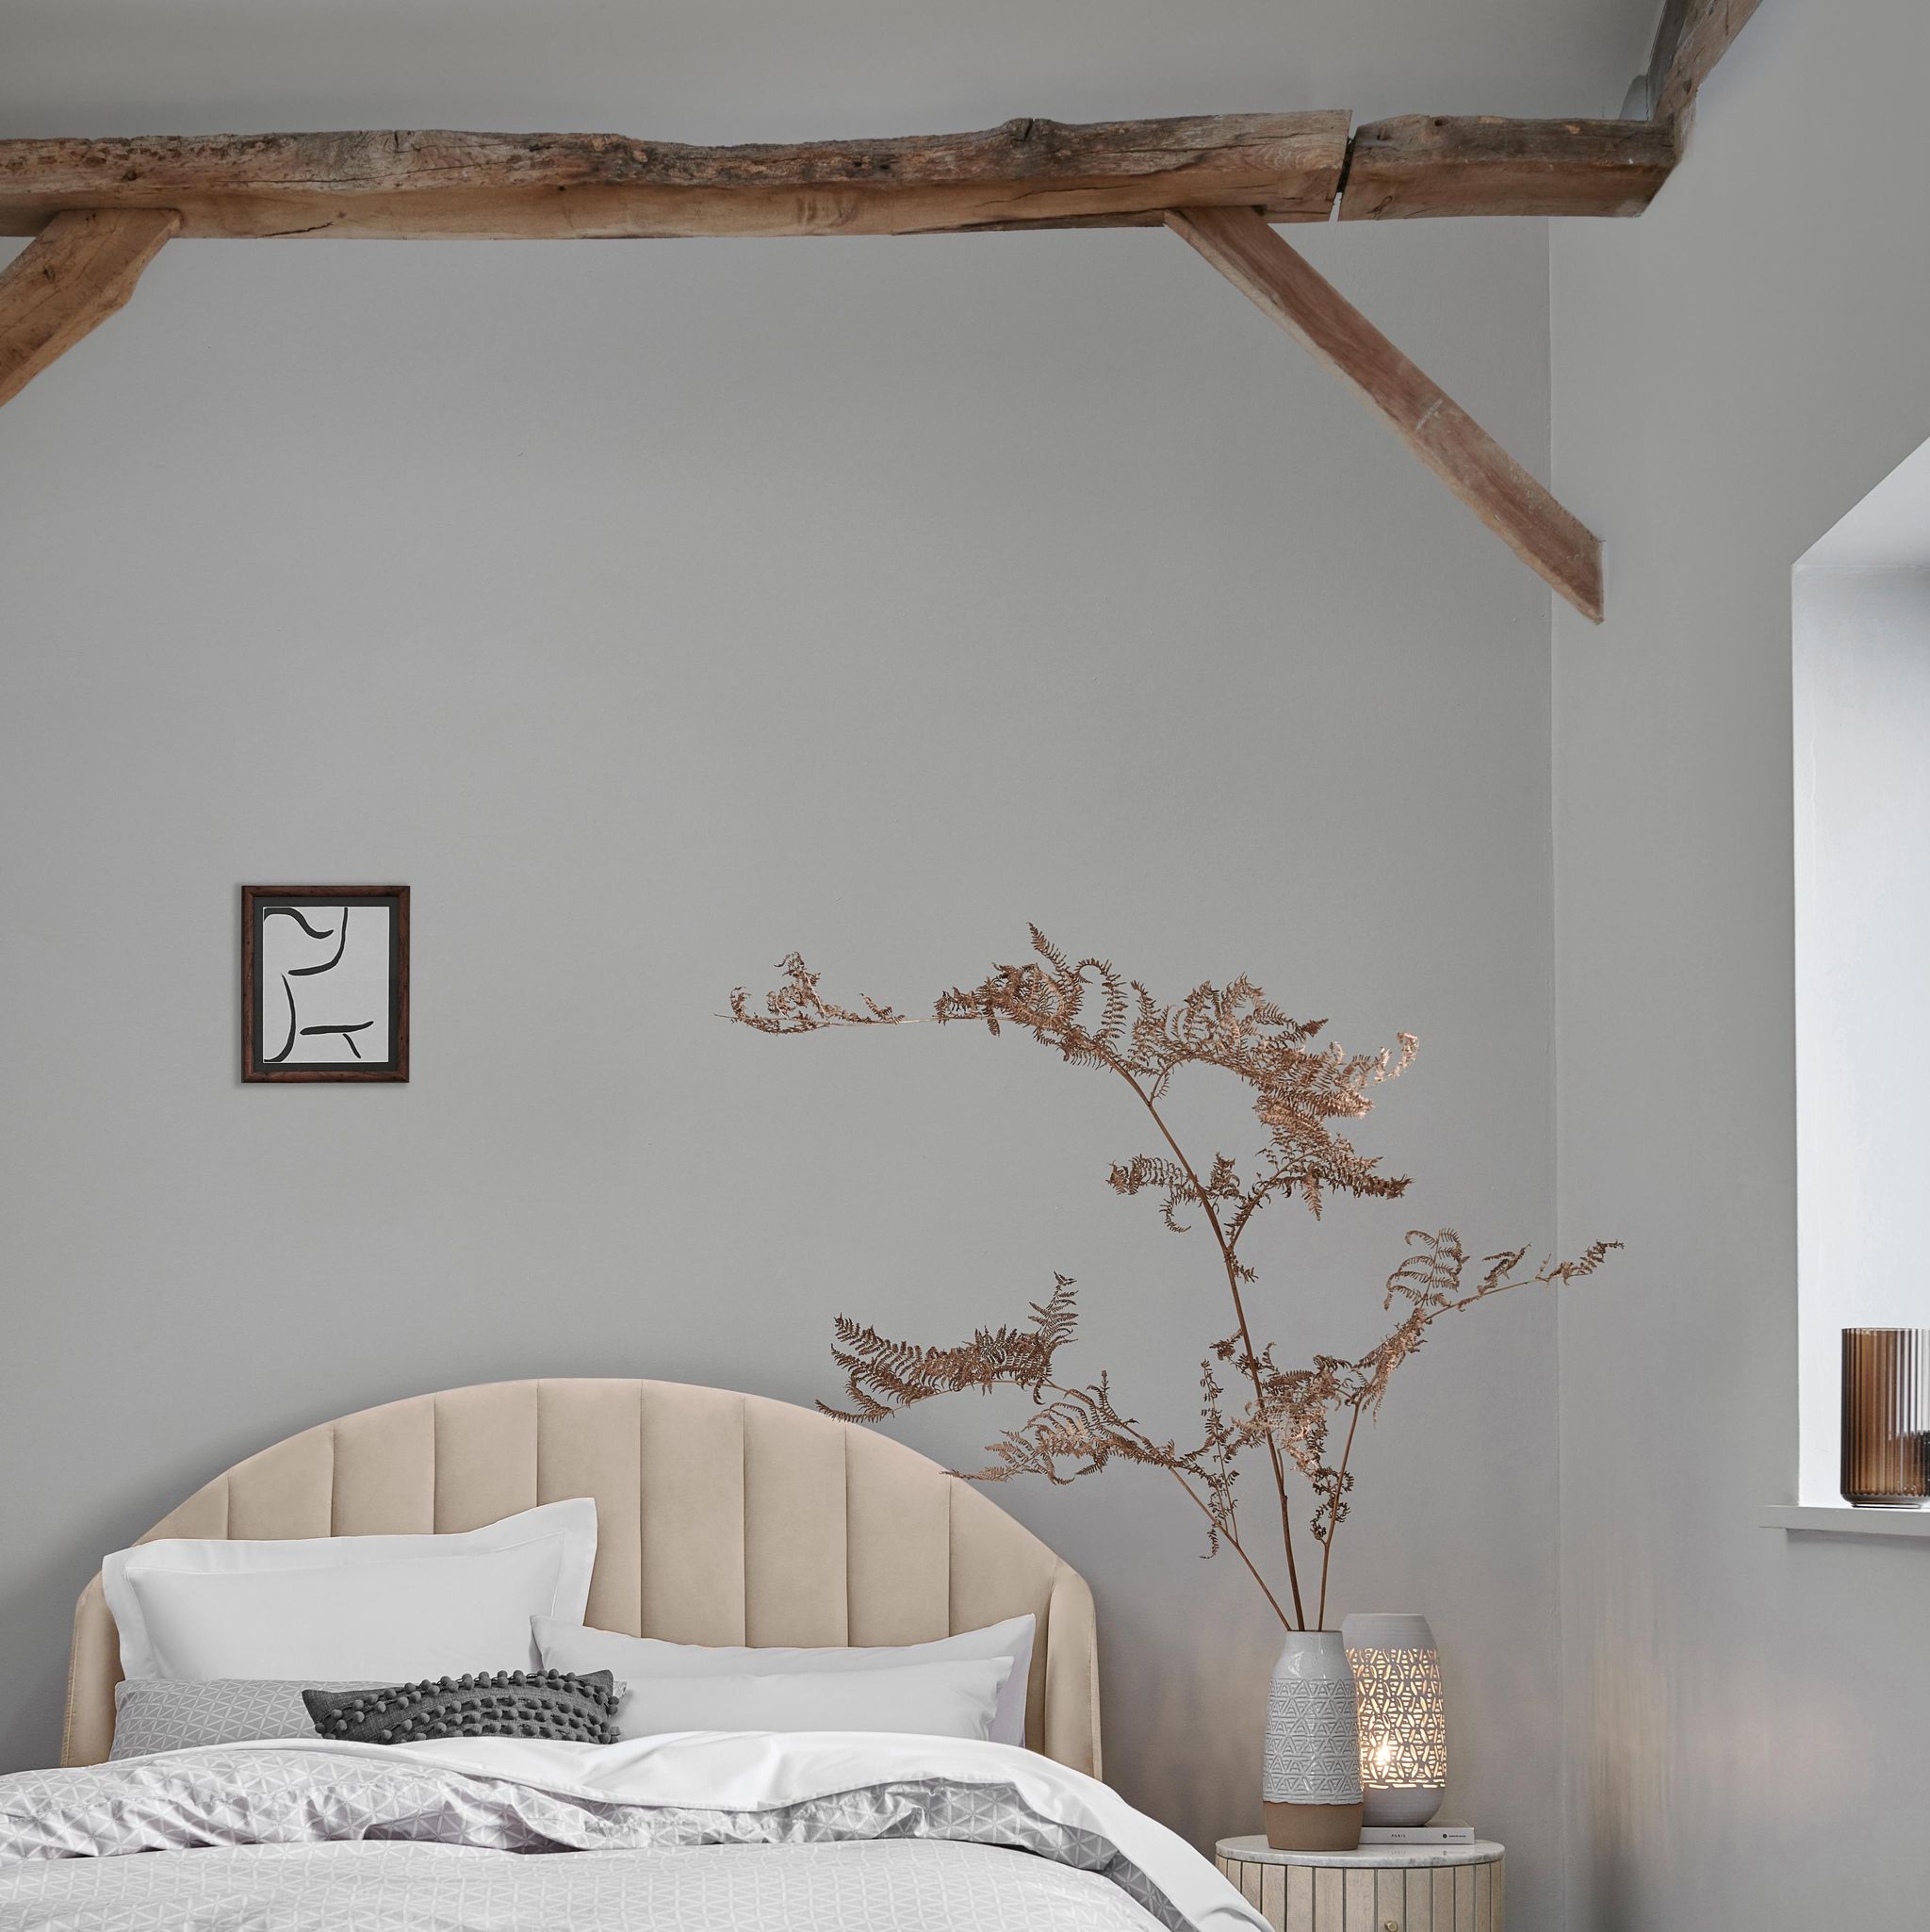 5 Bedroom Decor Trends to Embrace — Bedroom Ideas